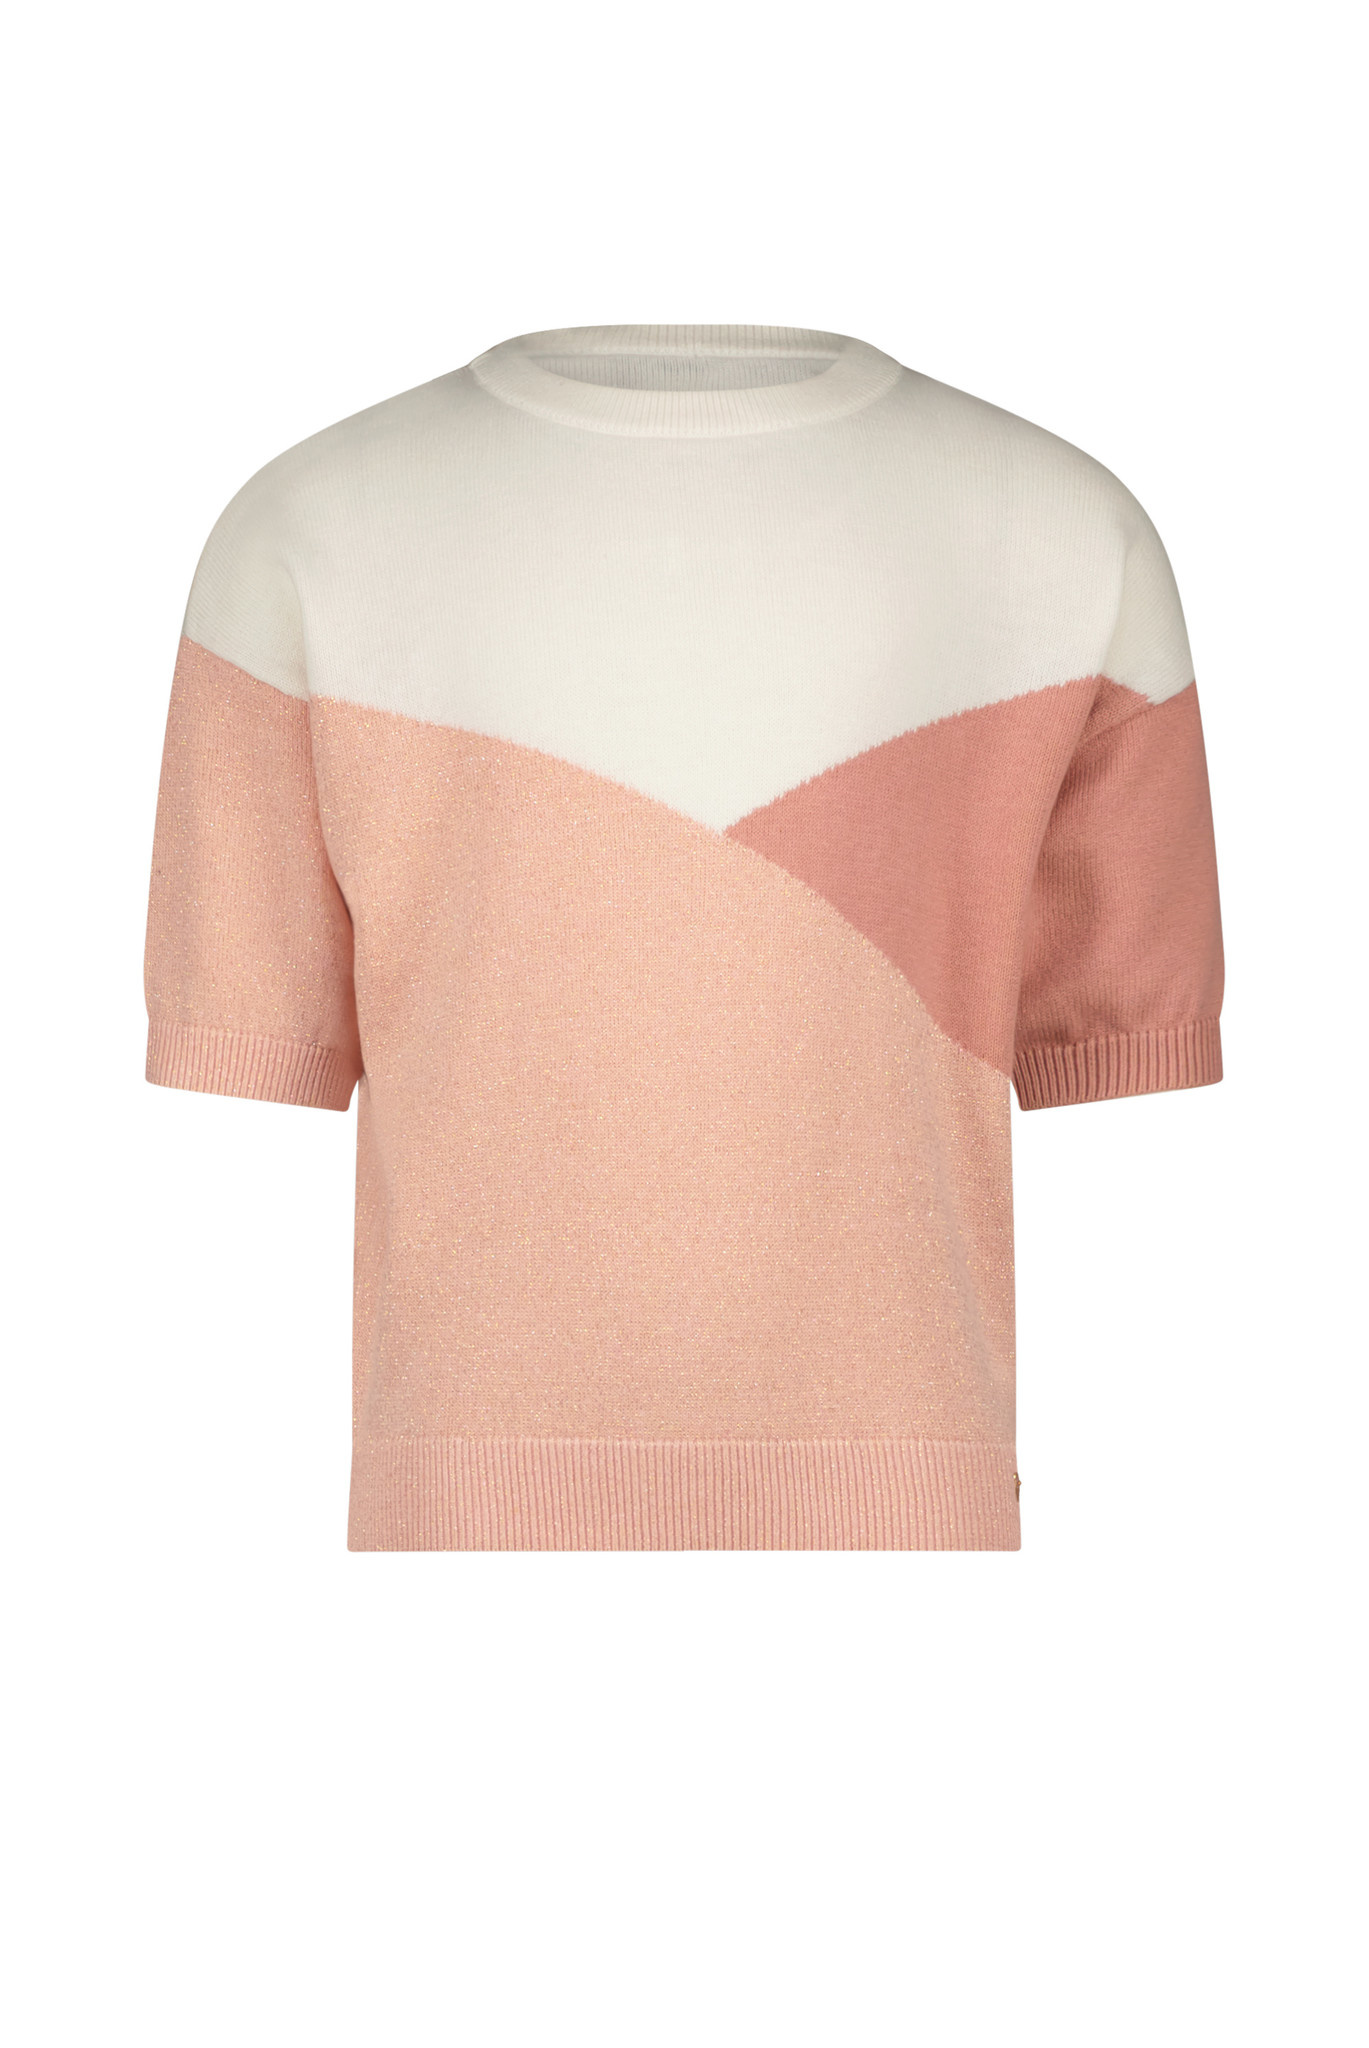 NONO - T-Shirt - Rosy Ginger - Maat 158-164